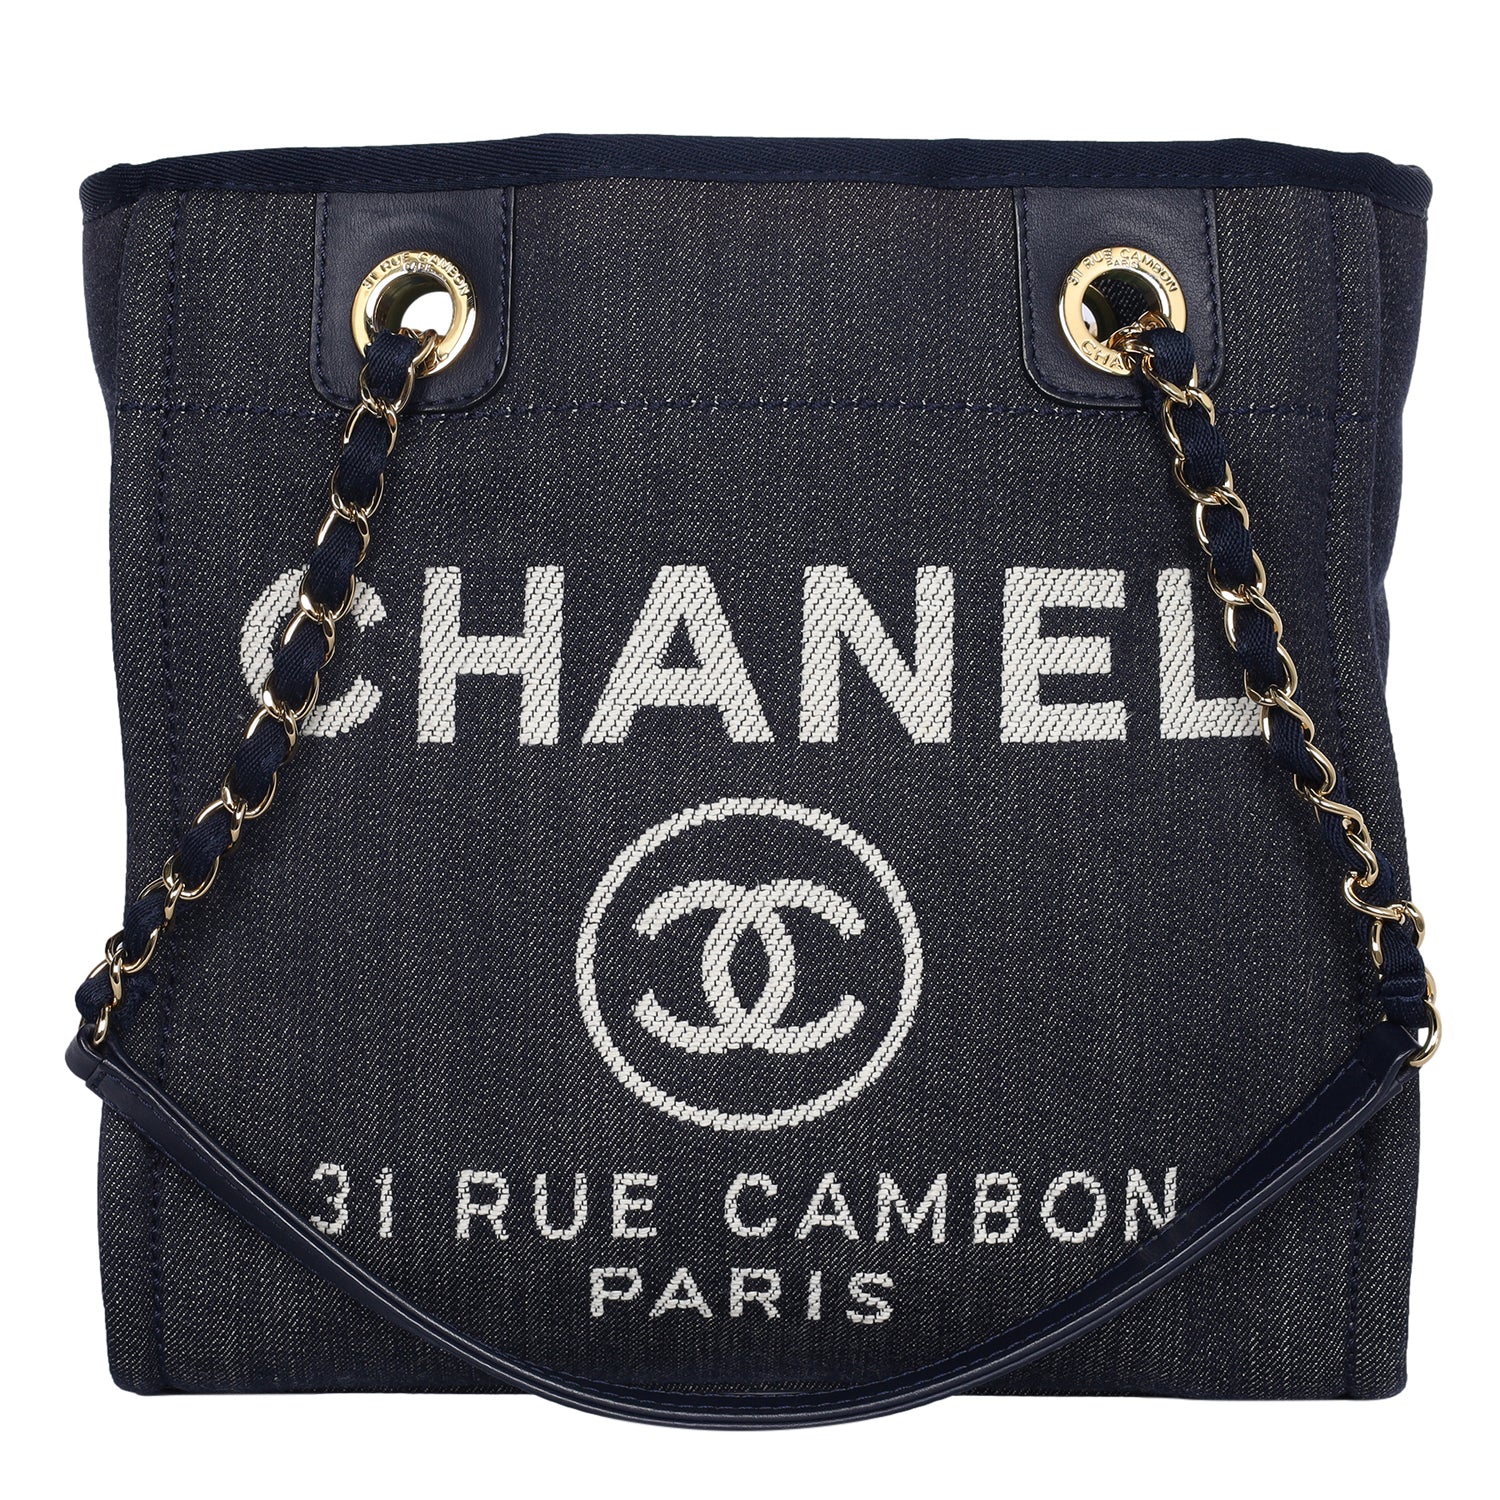 Chanel Deauville Shoulder bag in Beige Canvas Chanel